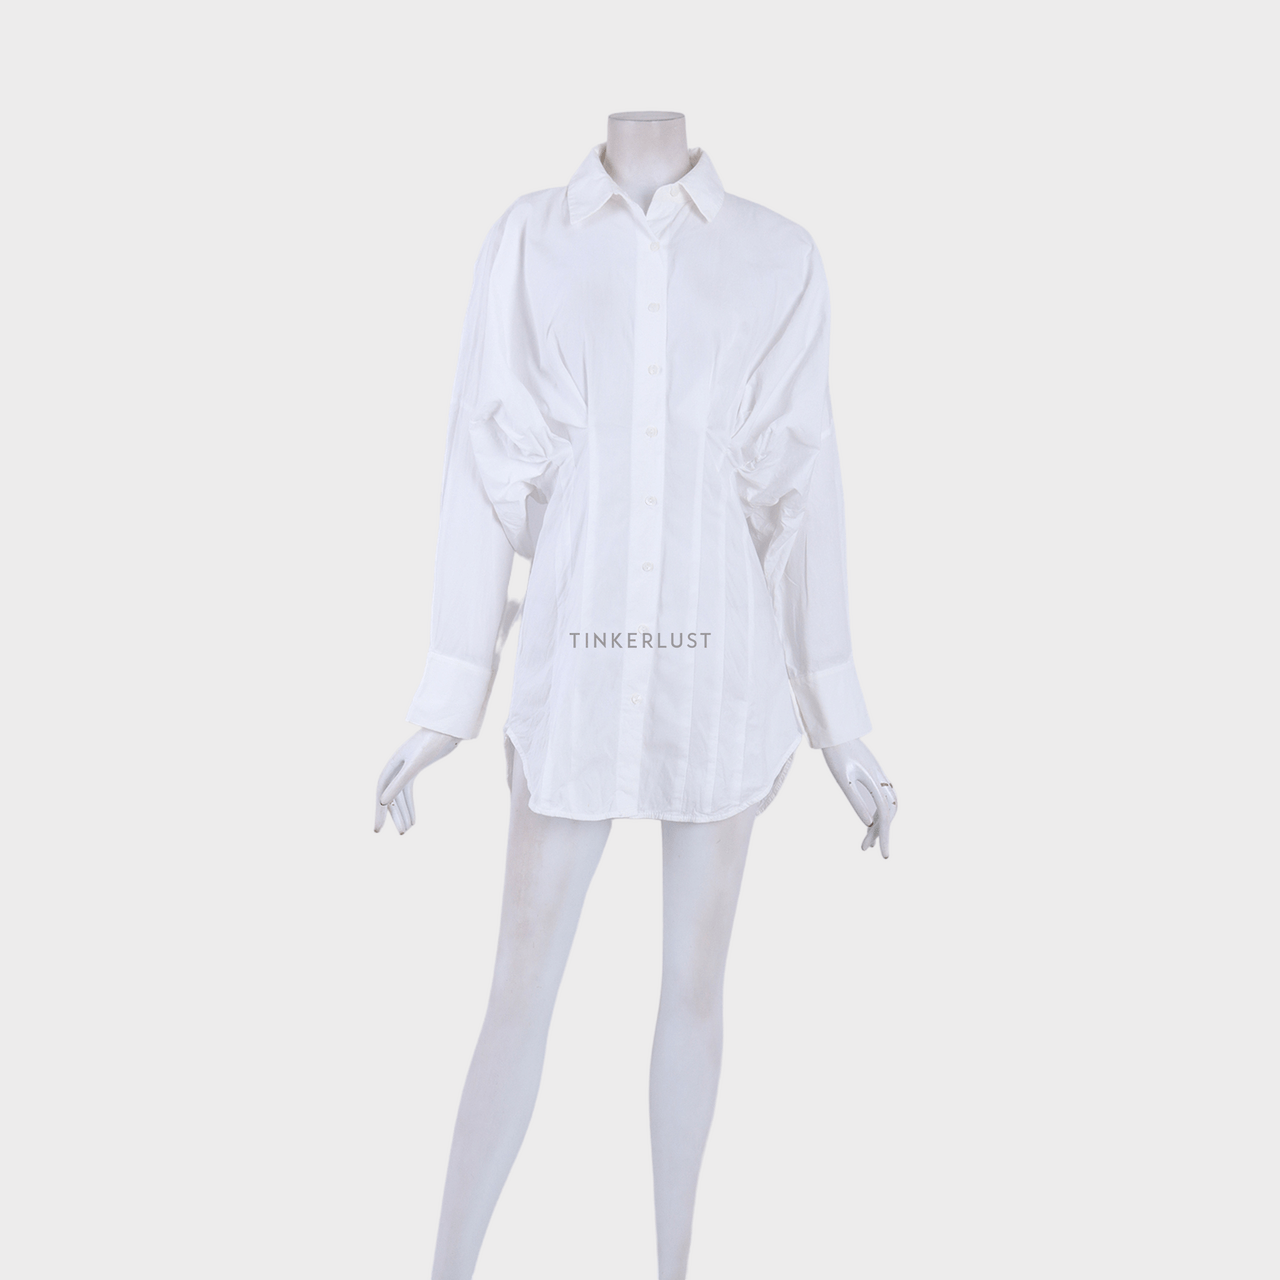 Zara White Shirt